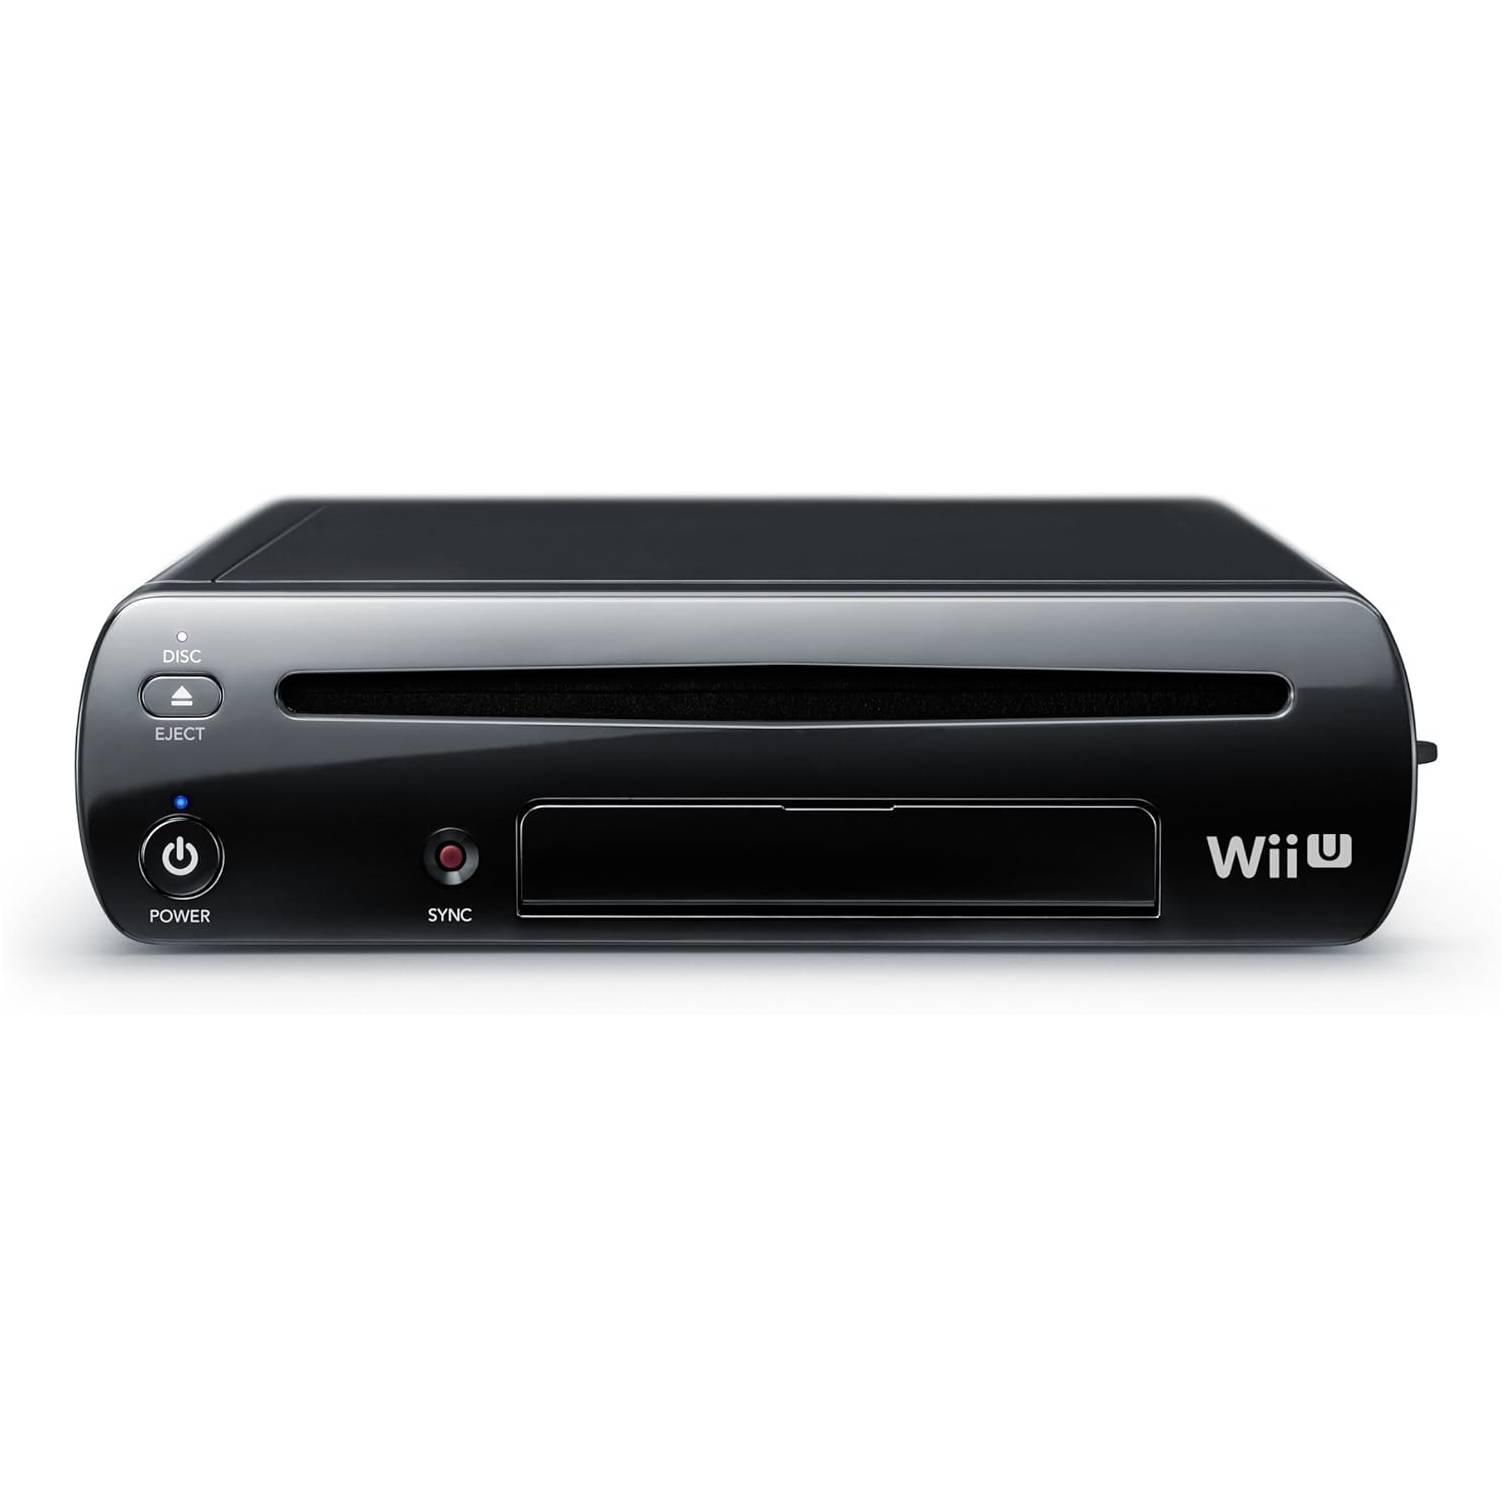 Nintendo Wii U 32GB Black front (1)